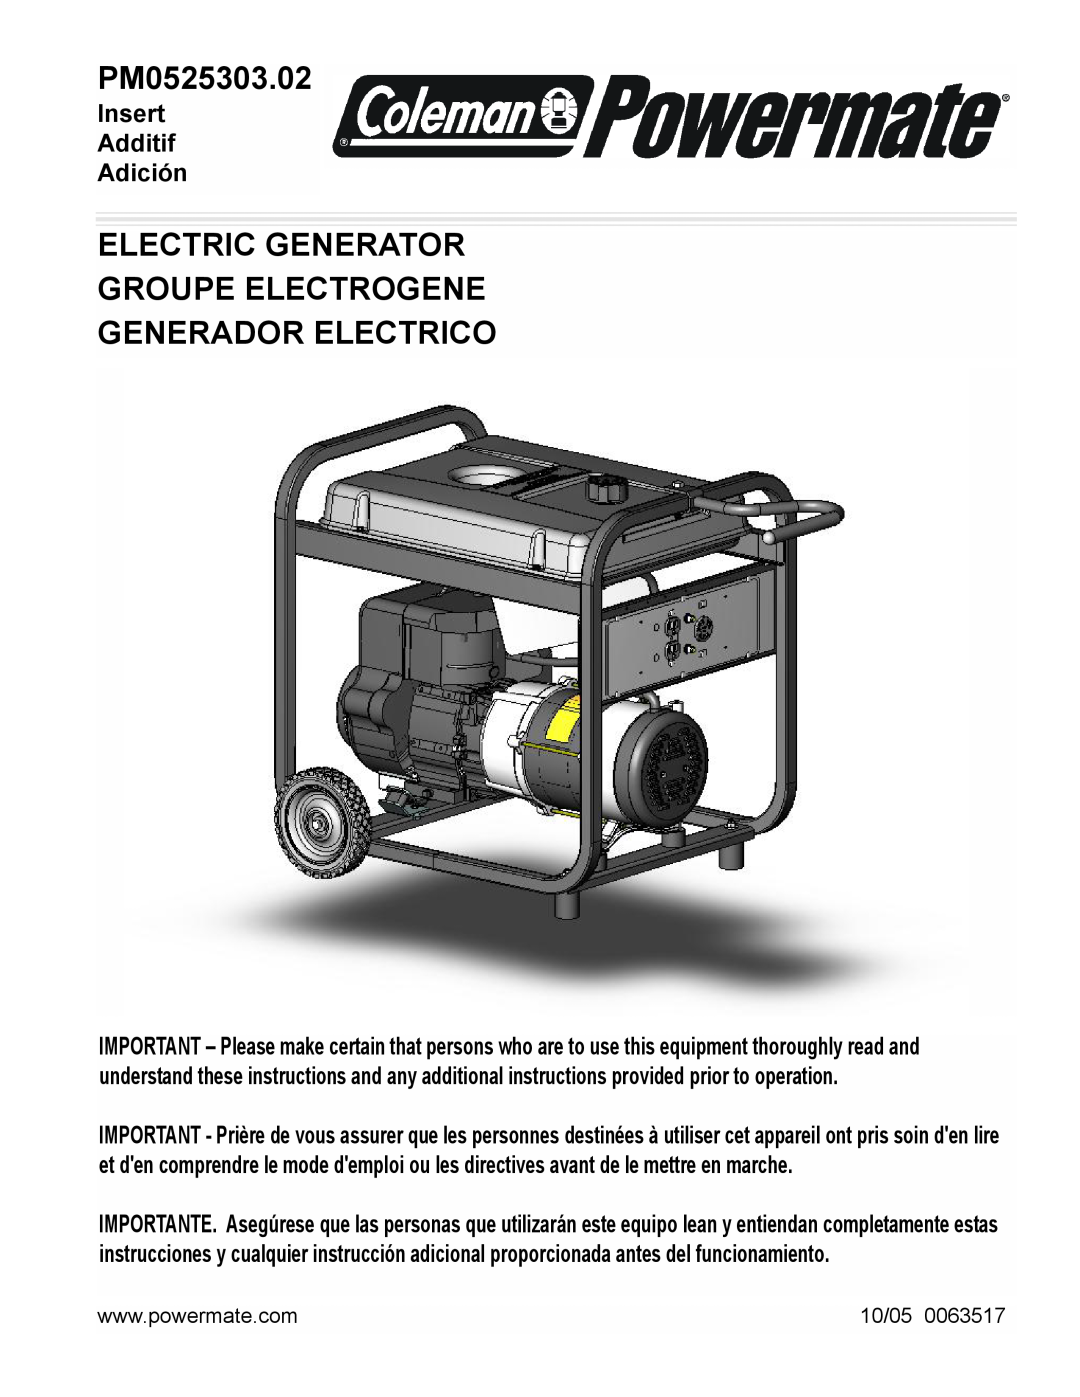 Powermate PM0525303.02 manual Electric Generator Groupe Electrogene, Generador Electrico, Insert Additif Adición, 10/05 